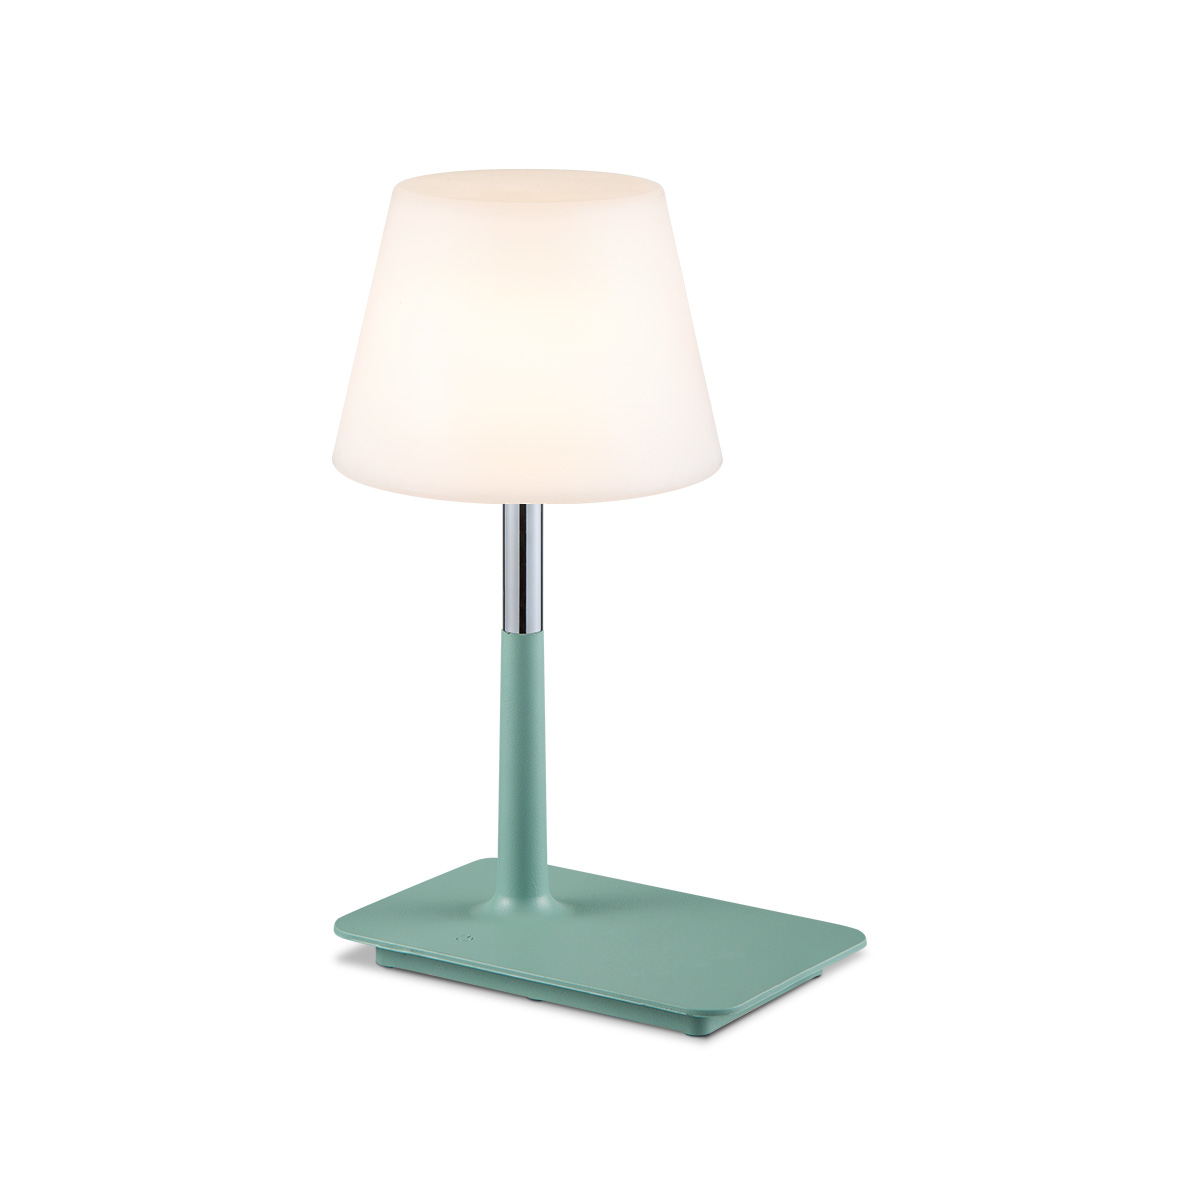 Tangla lighting - TLT7639-01GN - LED table lamp - rechargeable plastic - green - square